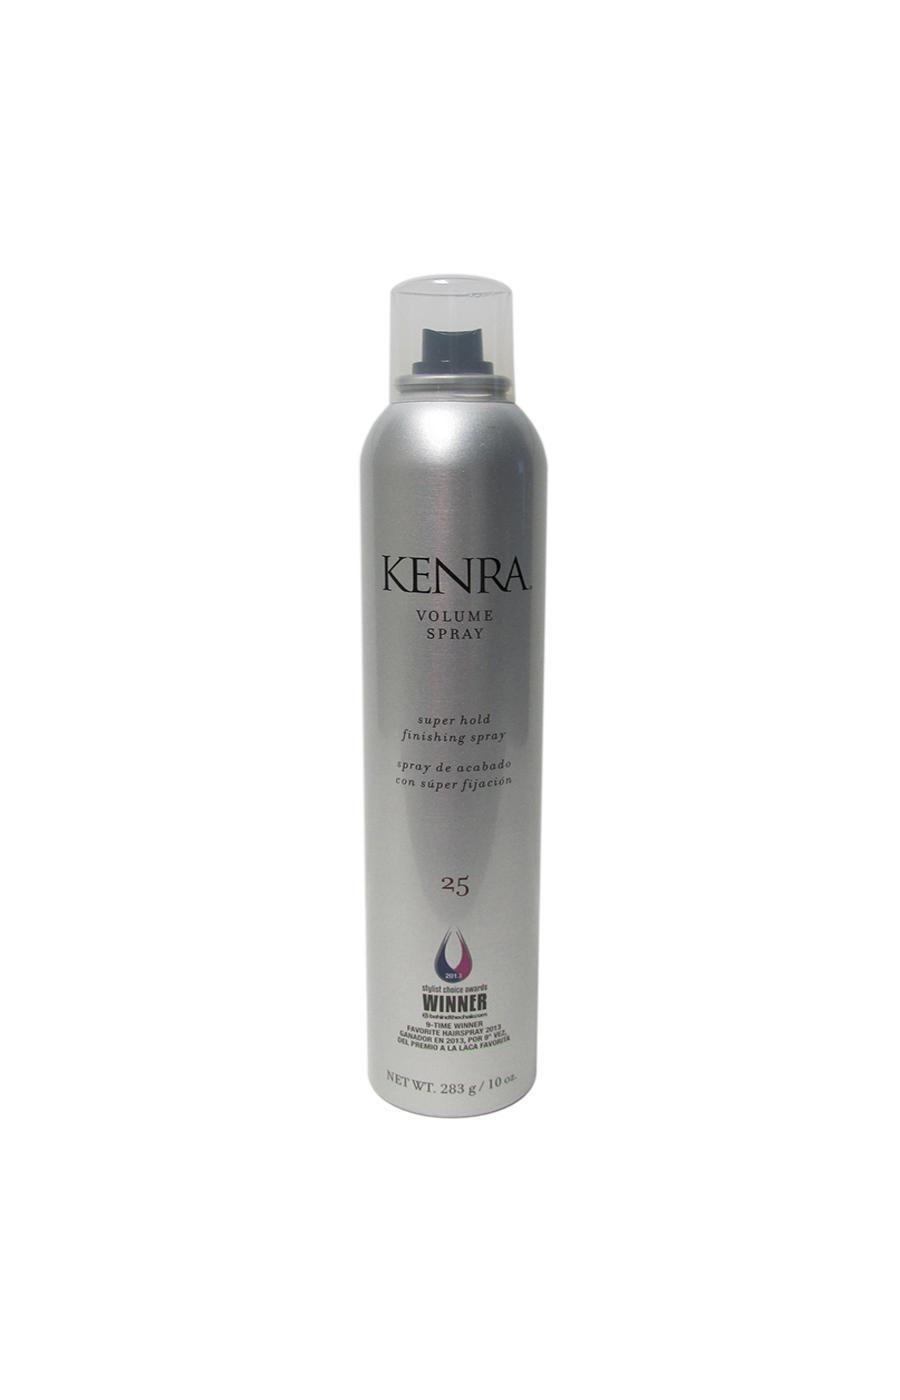 Kenra Volume Spray Super Hold Finishing Spray 25; image 2 of 2